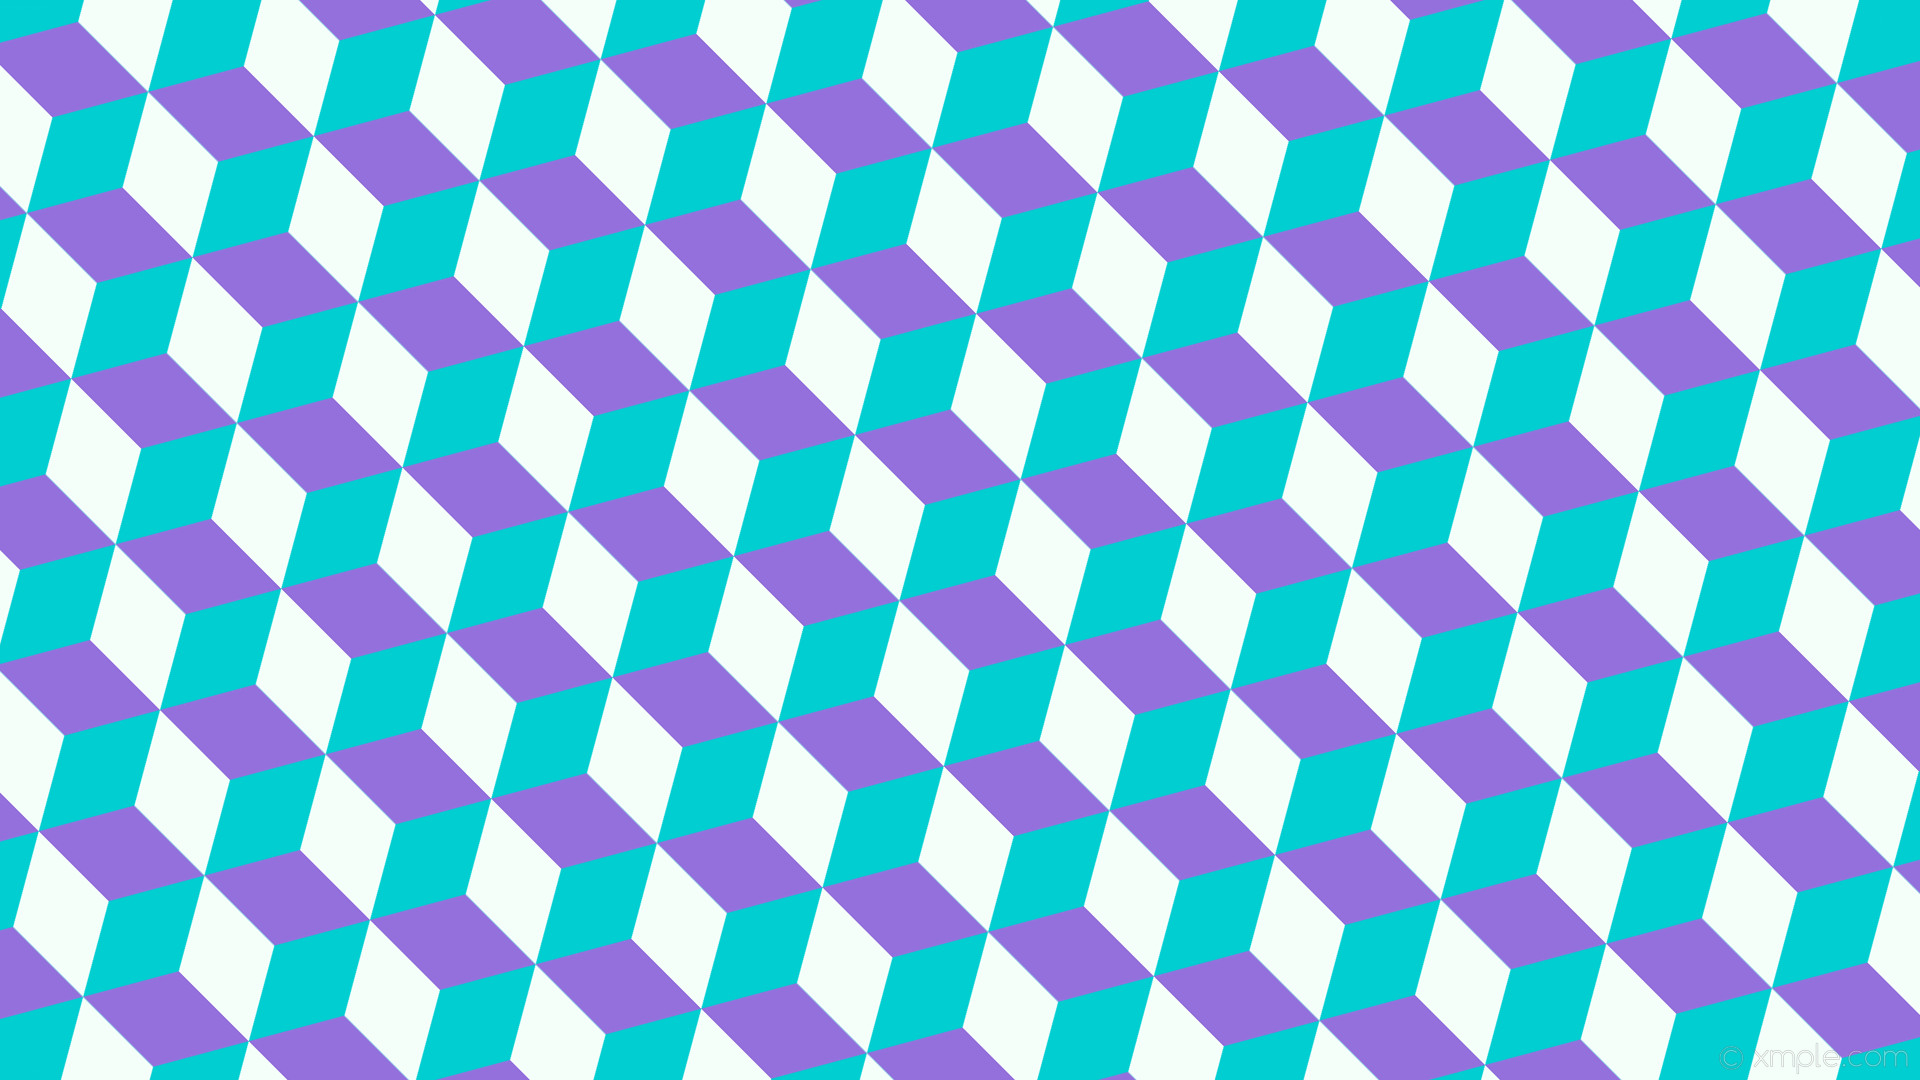 1920x1080 wallpaper white 3d cubes blue purple dark turquoise medium purple mint  cream #00ced1 #9370db